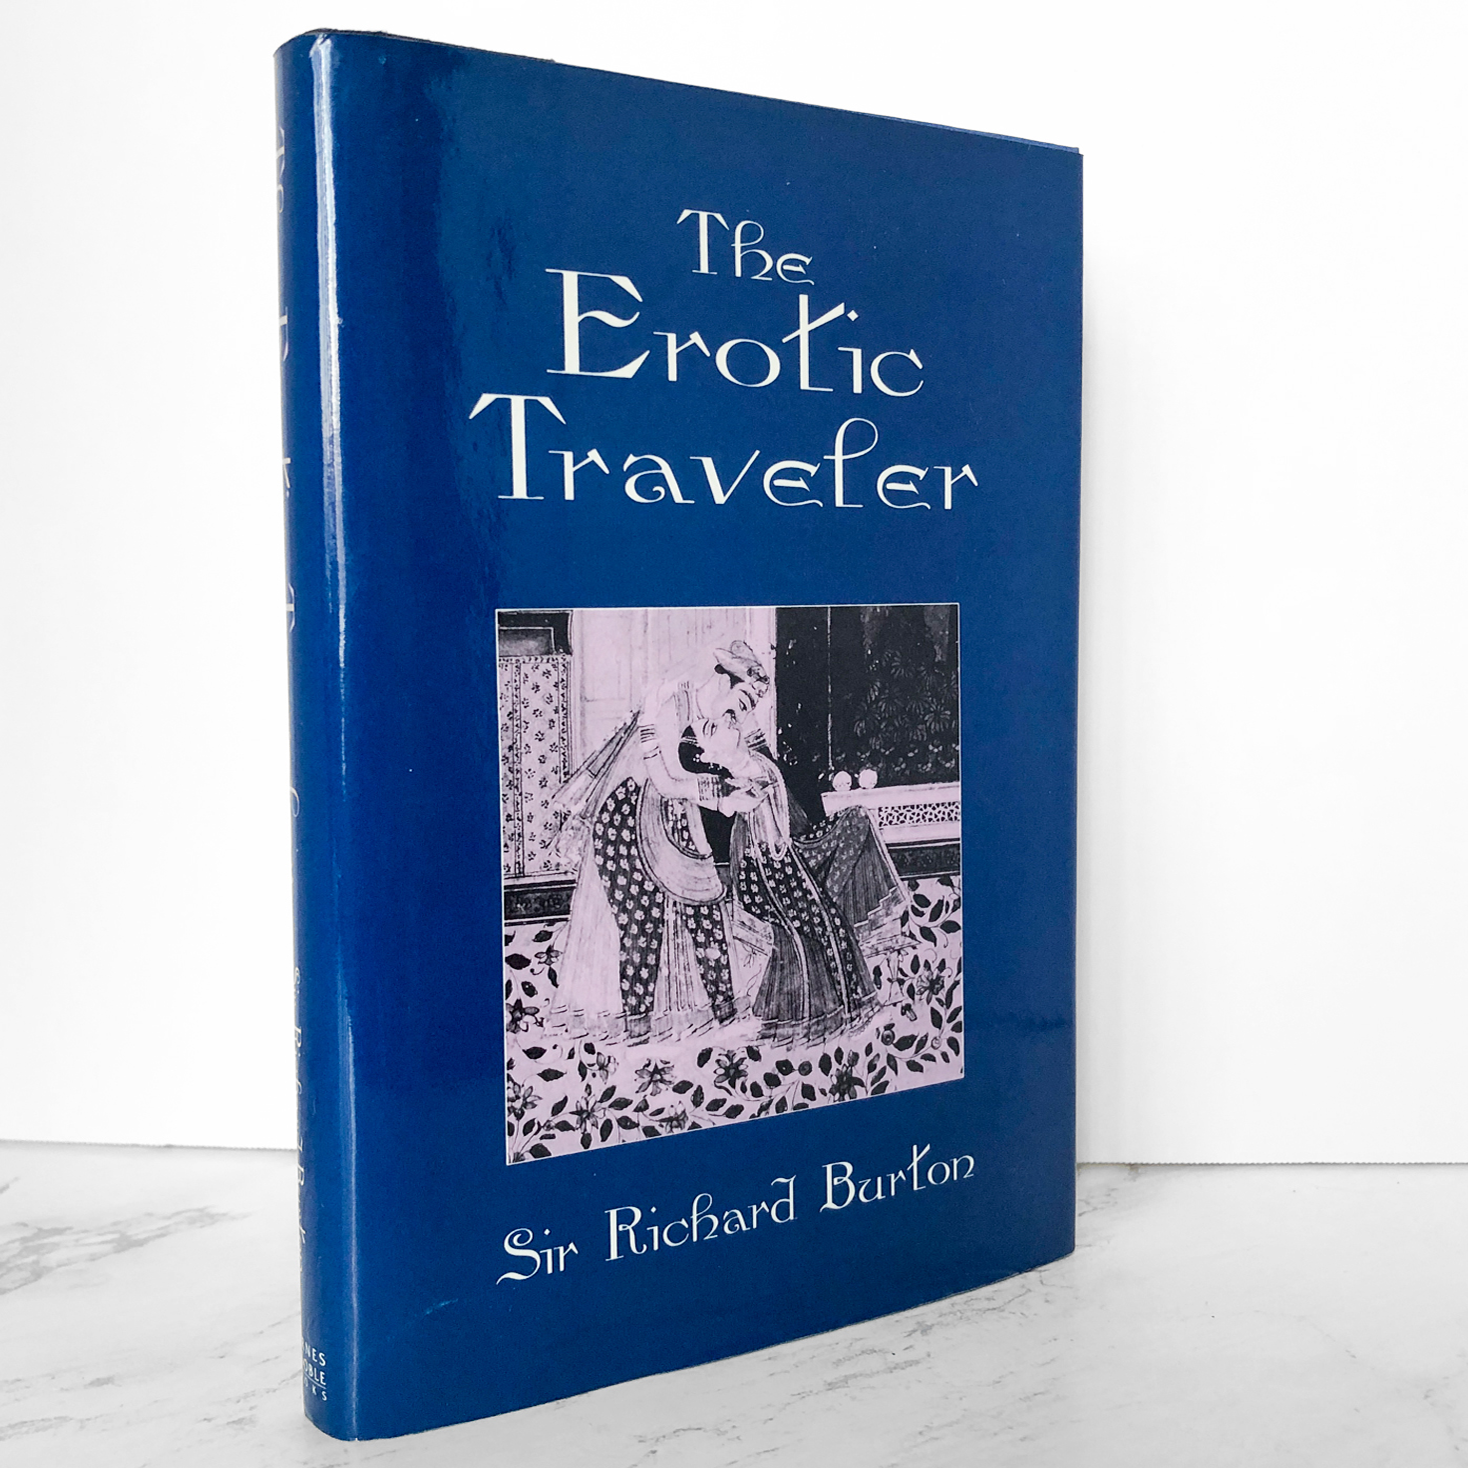 Erotic Traveller